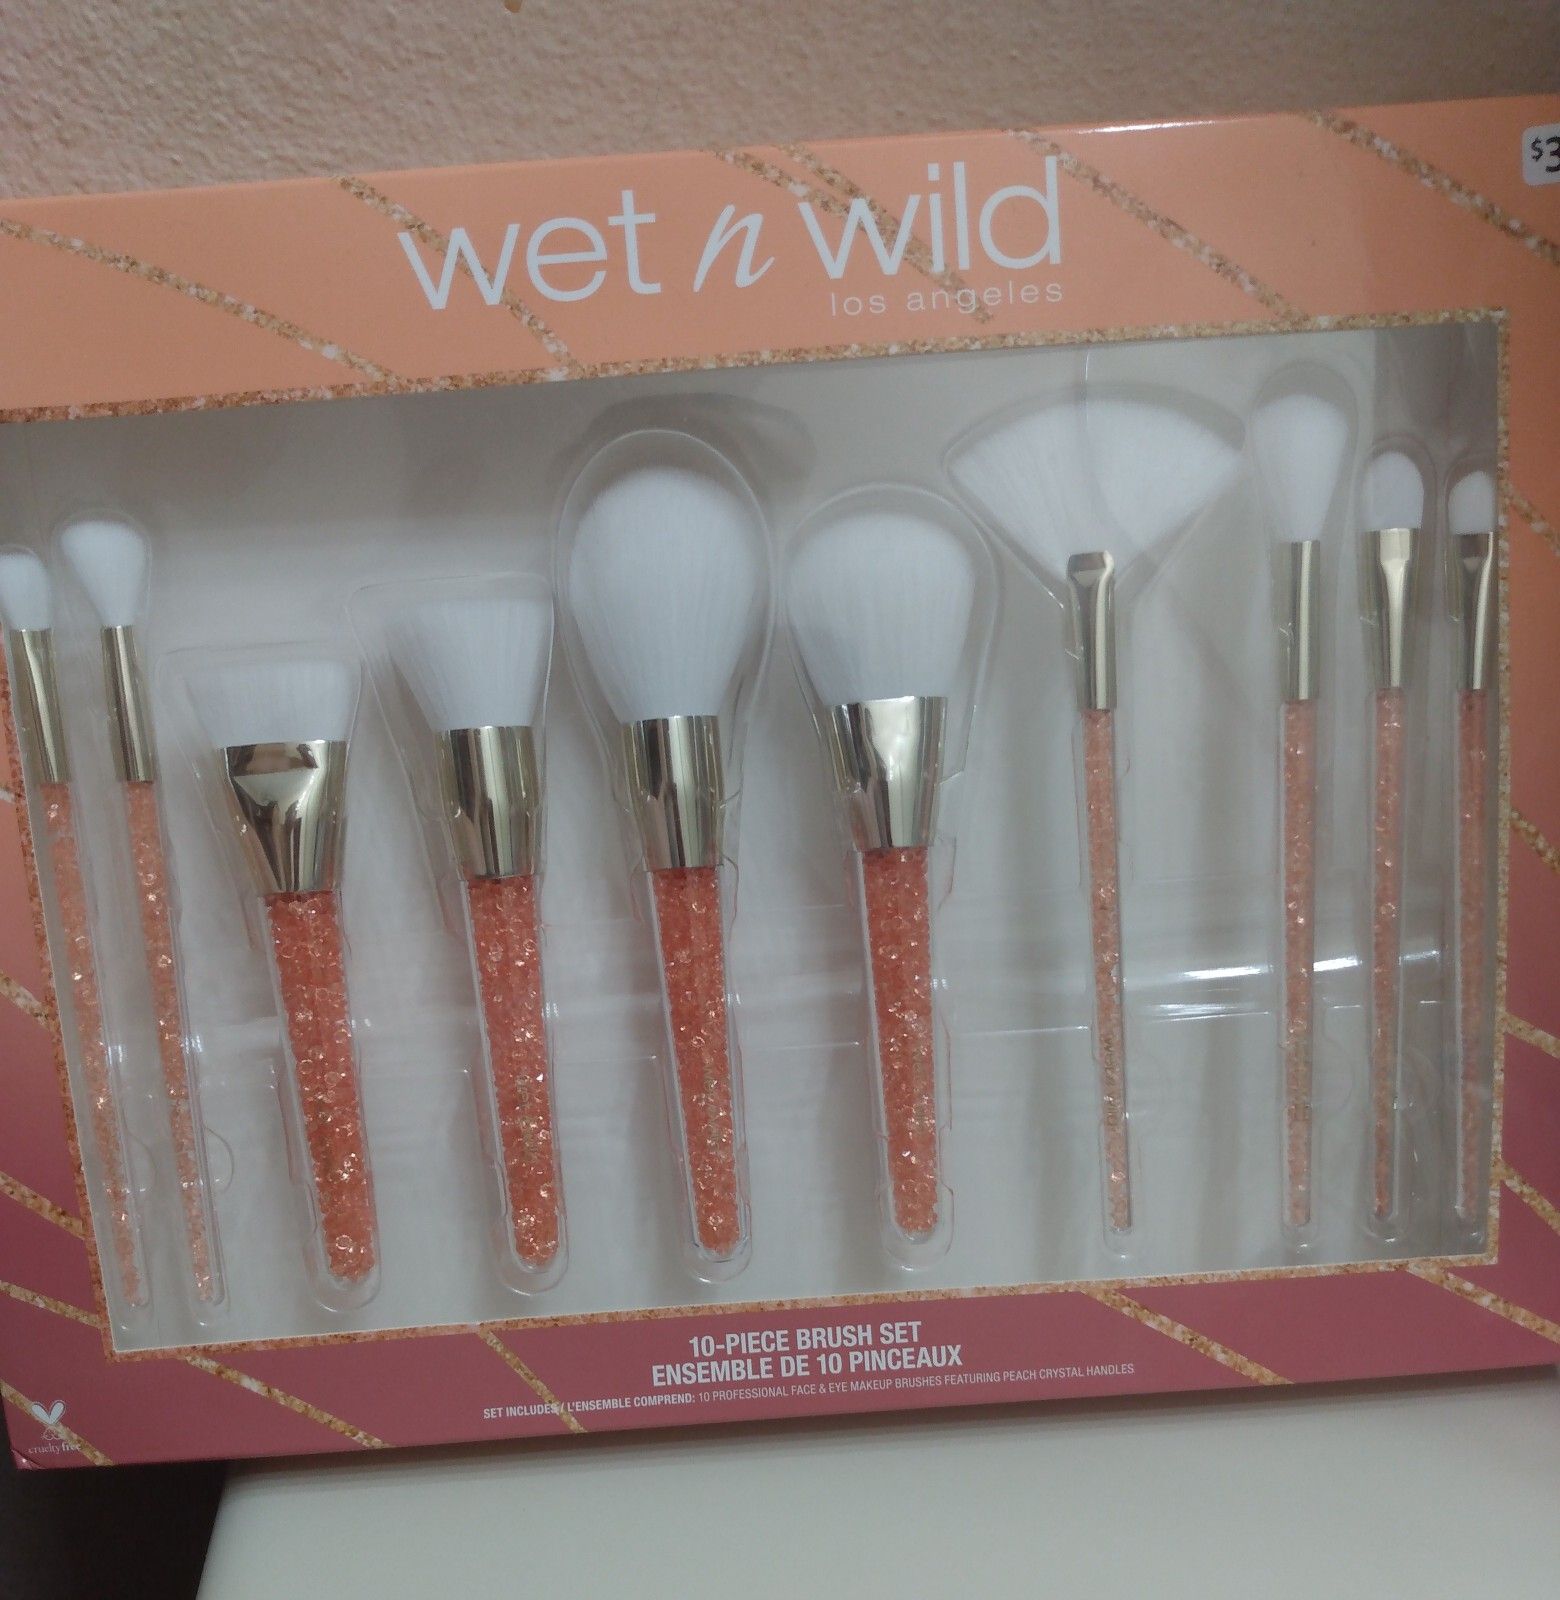 Wet n wild makeup brushes